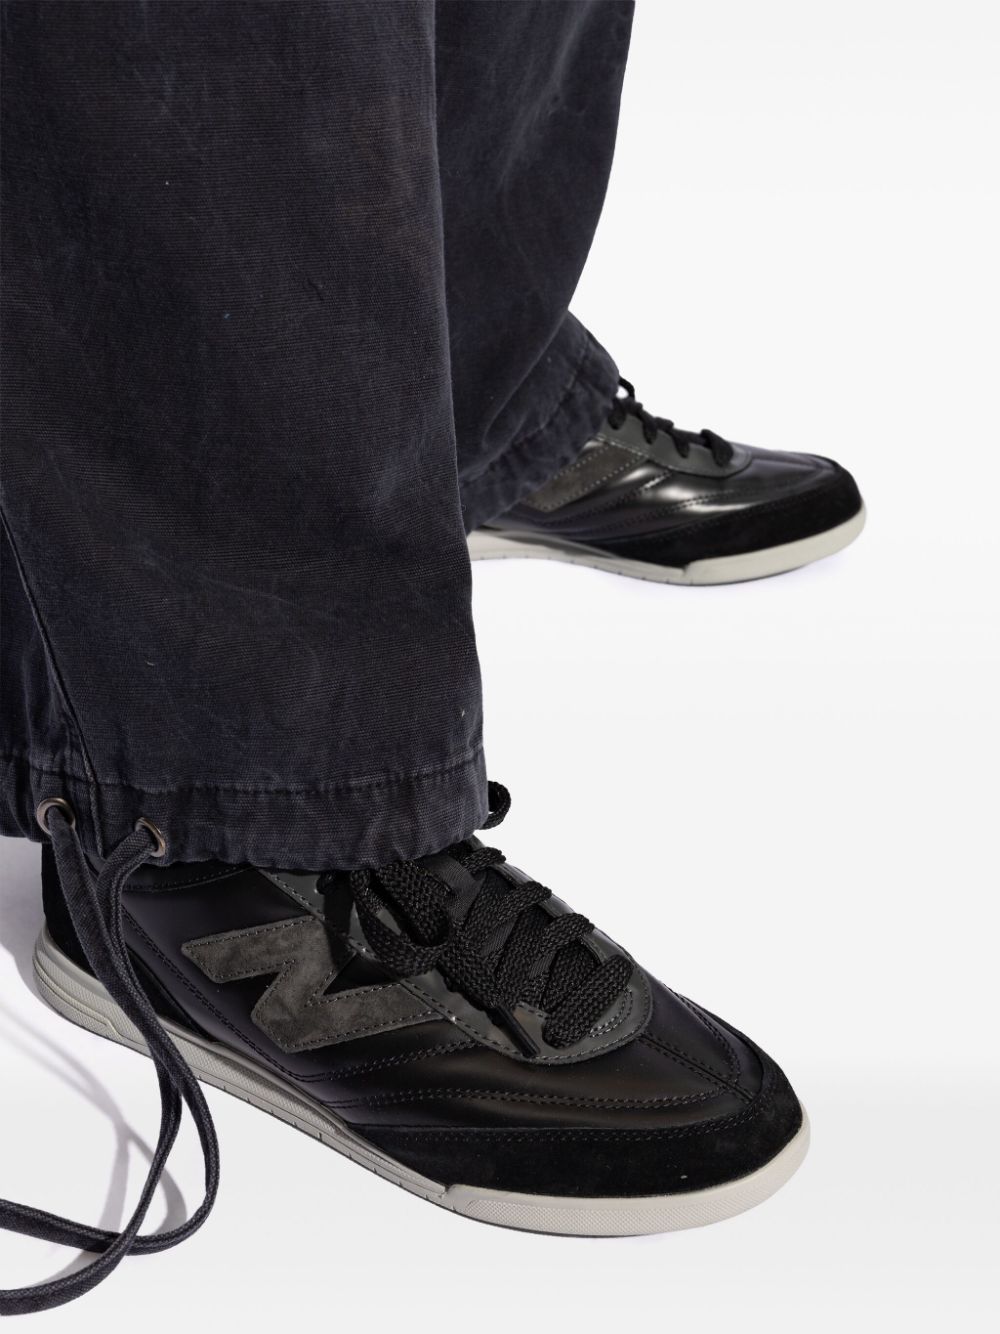 New Balance x RC42 sneakers Black